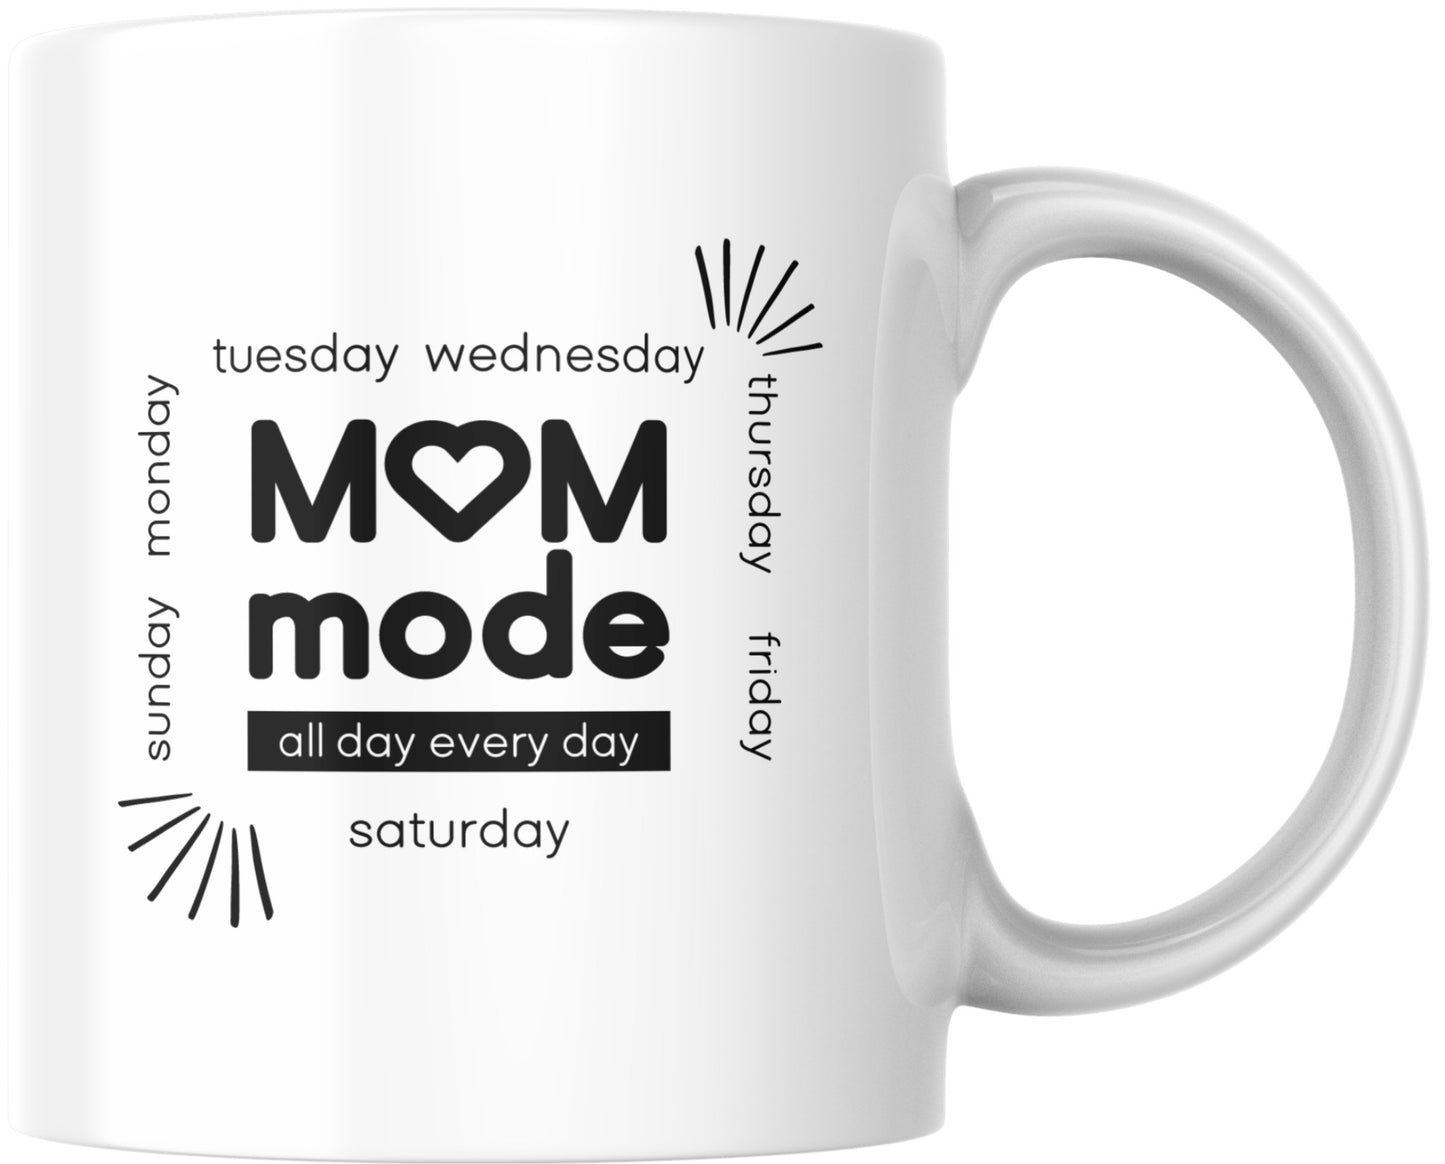 Mom Mode Bruh - Gear Up ZA